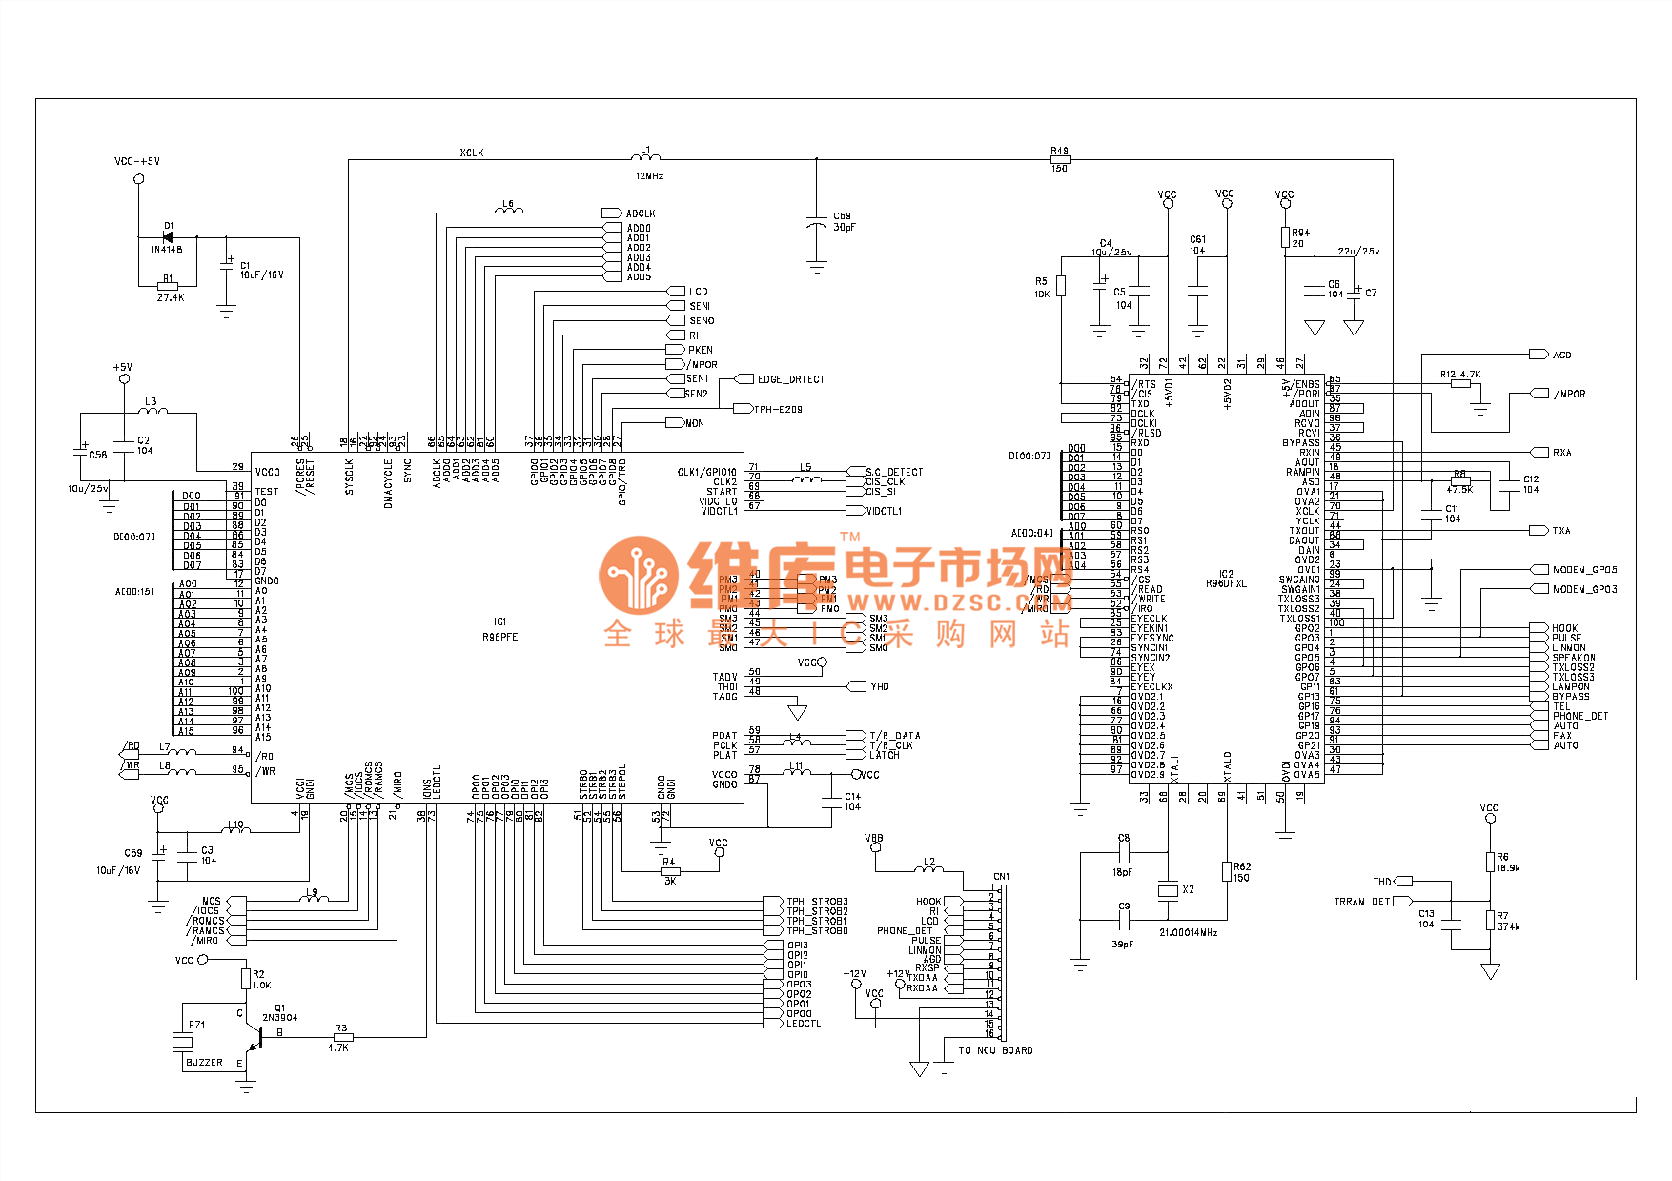 Fax circuit diagram - Electrical_Equipment_Circuit - Circuit Diagram